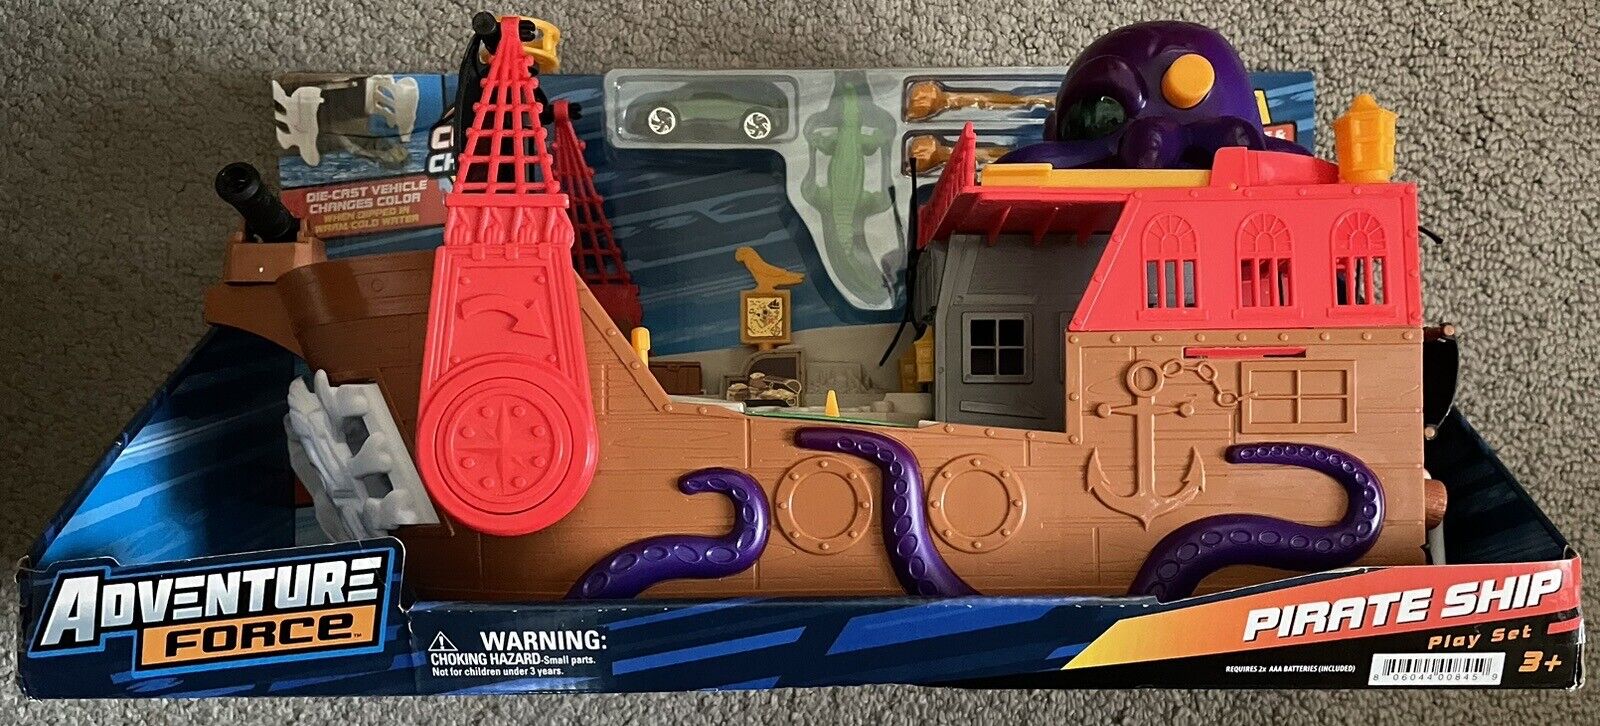 Adventure Force Pirate Ship Die-Cast Vehicle Playset, Multi-Color, Color Change Adventure Force Does not apply - фотография #2